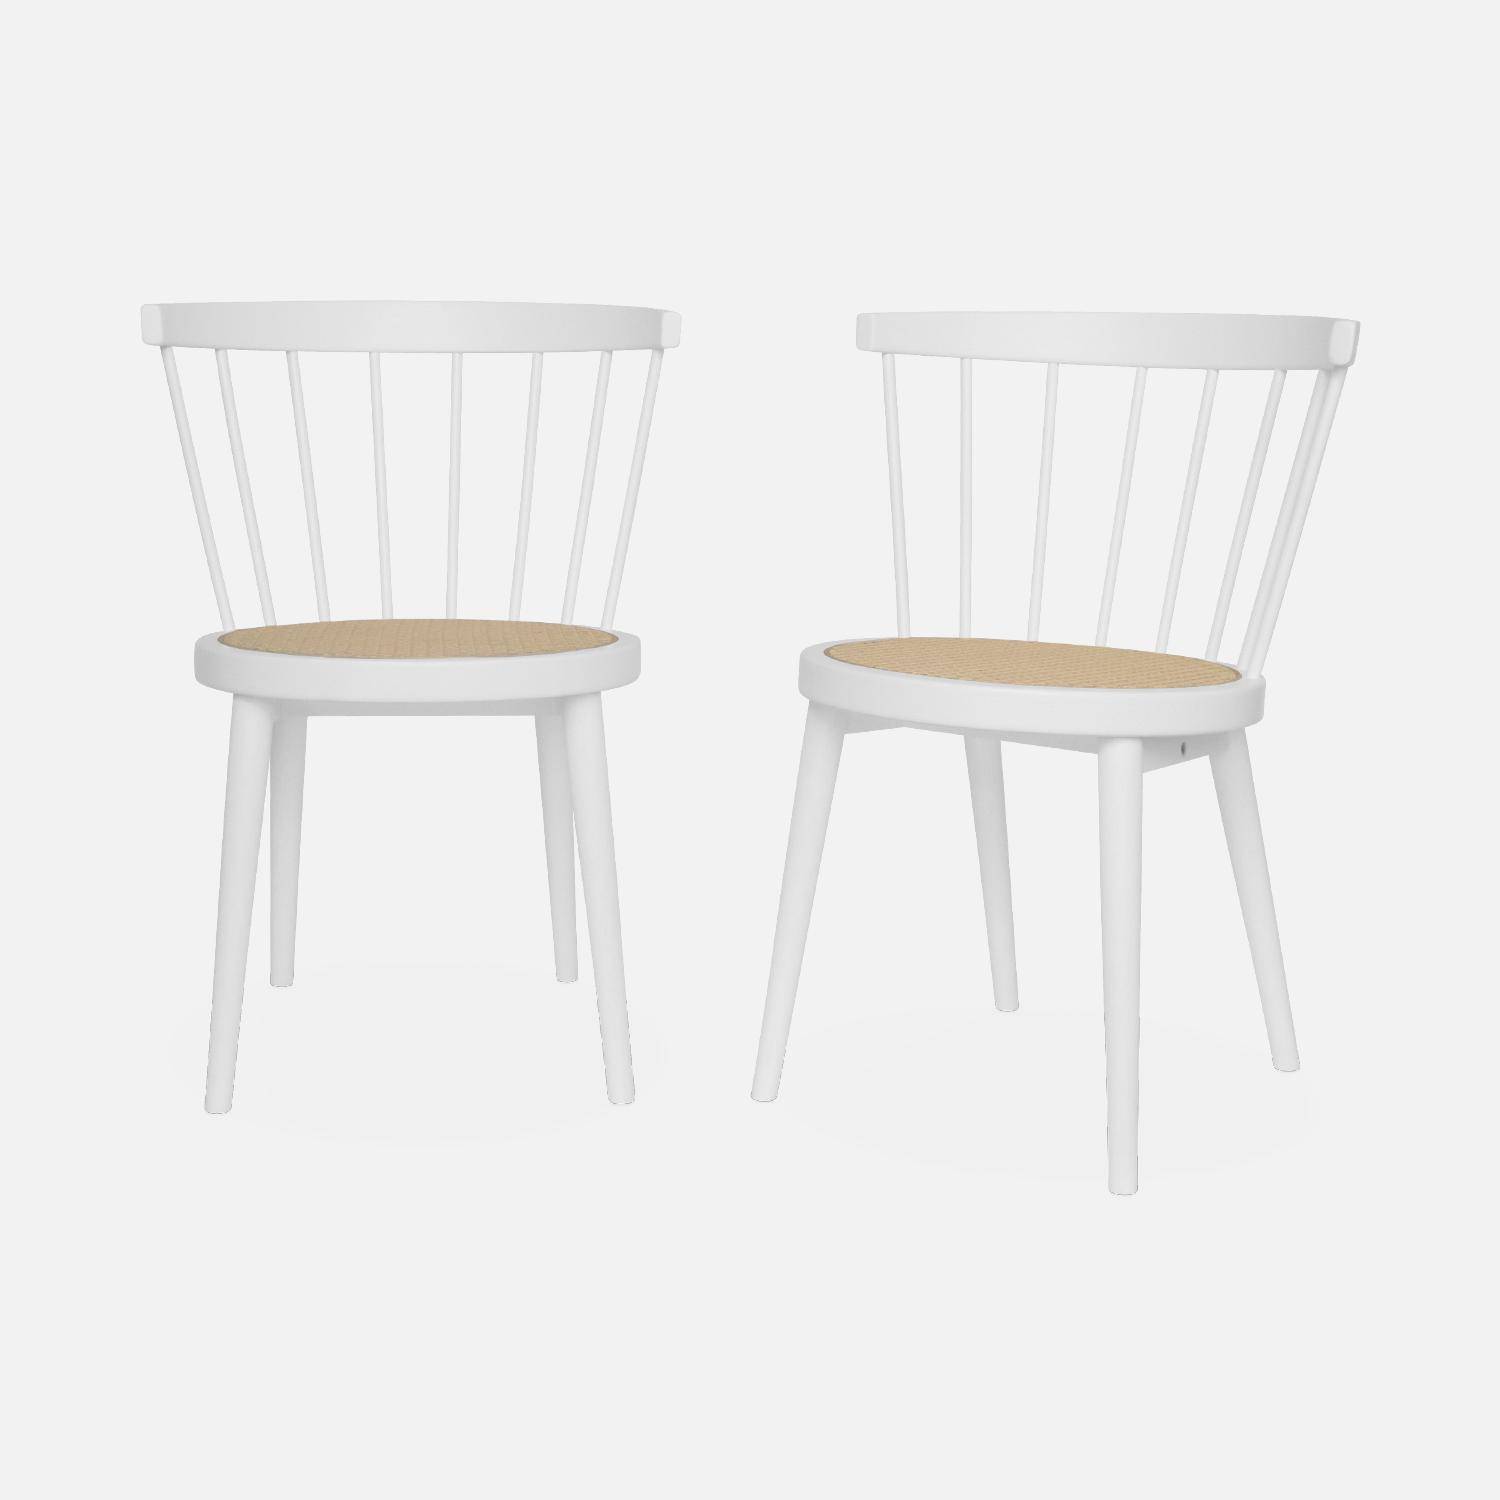 Pair of  Wood and Cane Chairs, Bohemian Spirit, White, L53 x W53.5 x H 6 cm Photo3